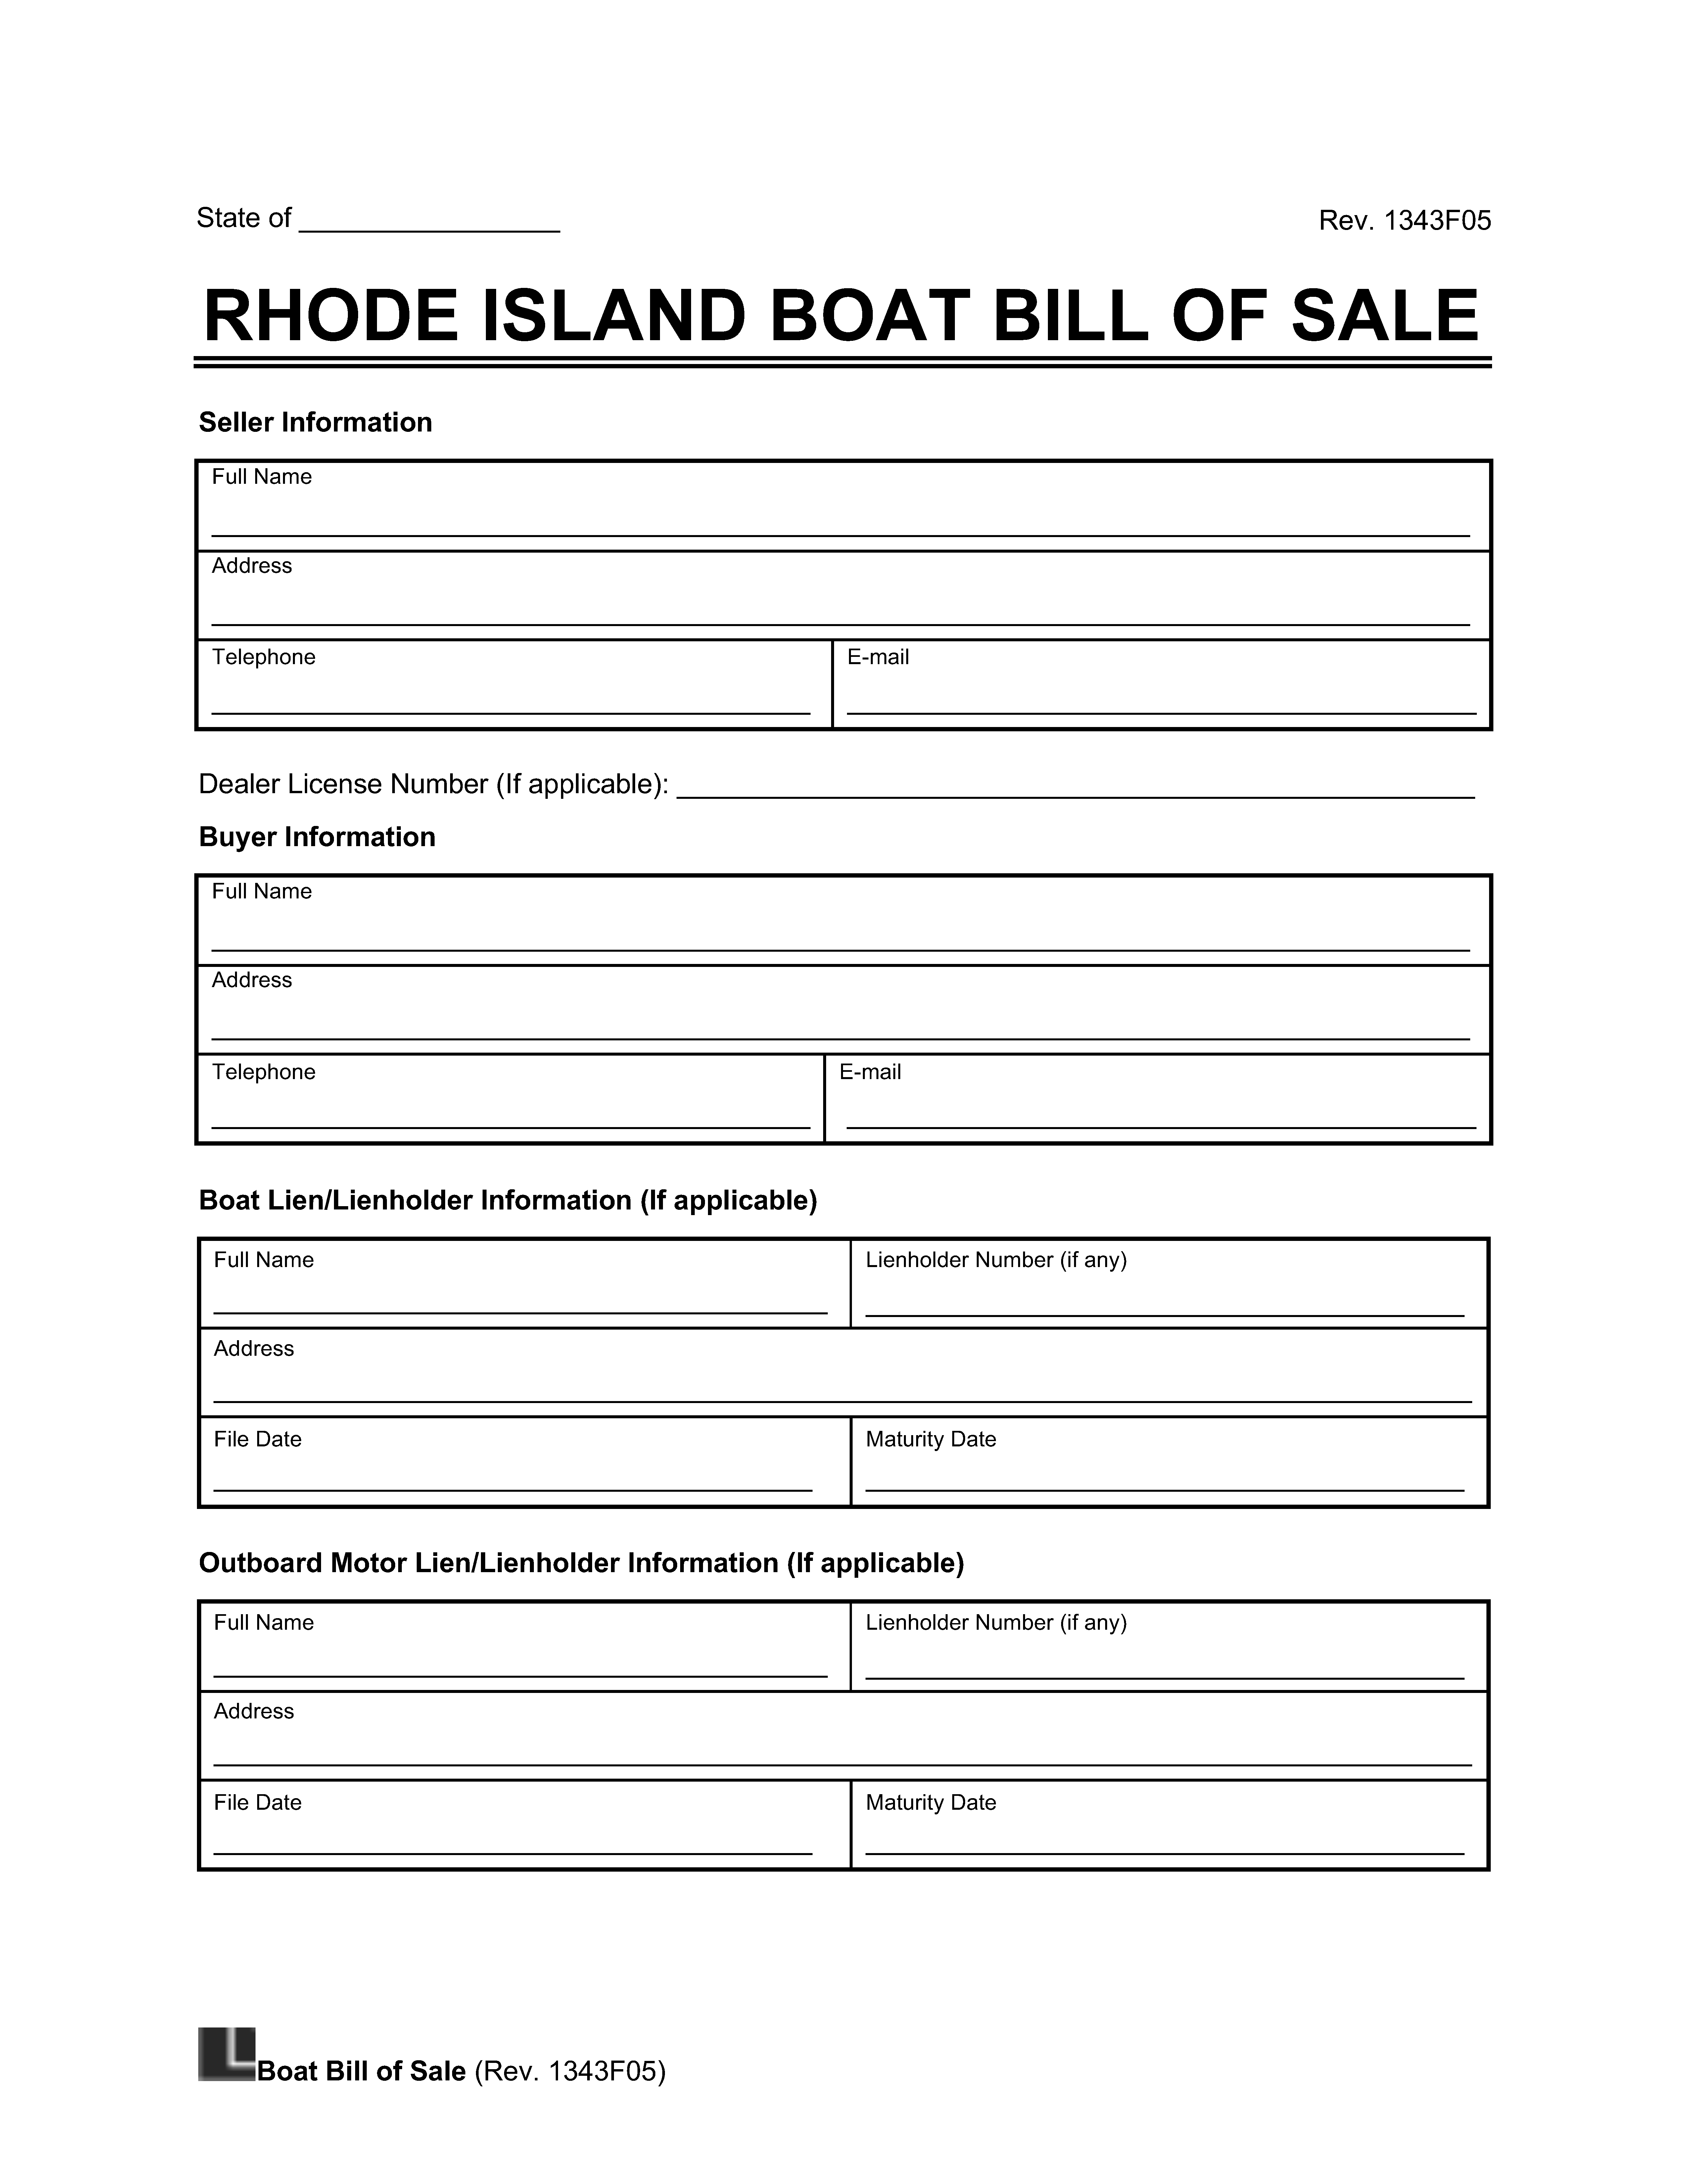 Boat Bill of Sale Rhode Island screenshot